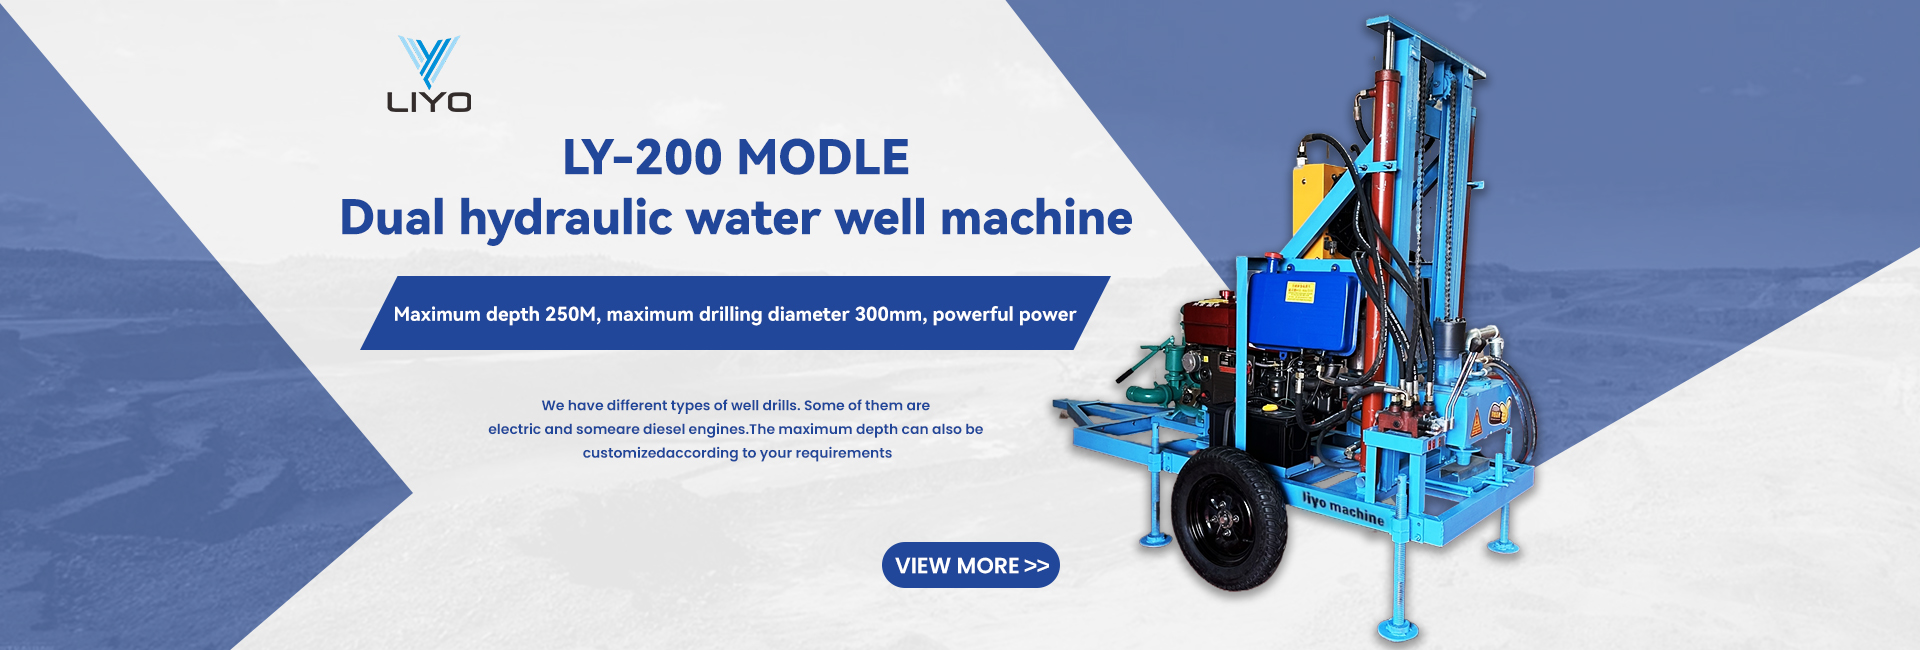 LIYO-200D Dual Hydraulic Water Well Machine